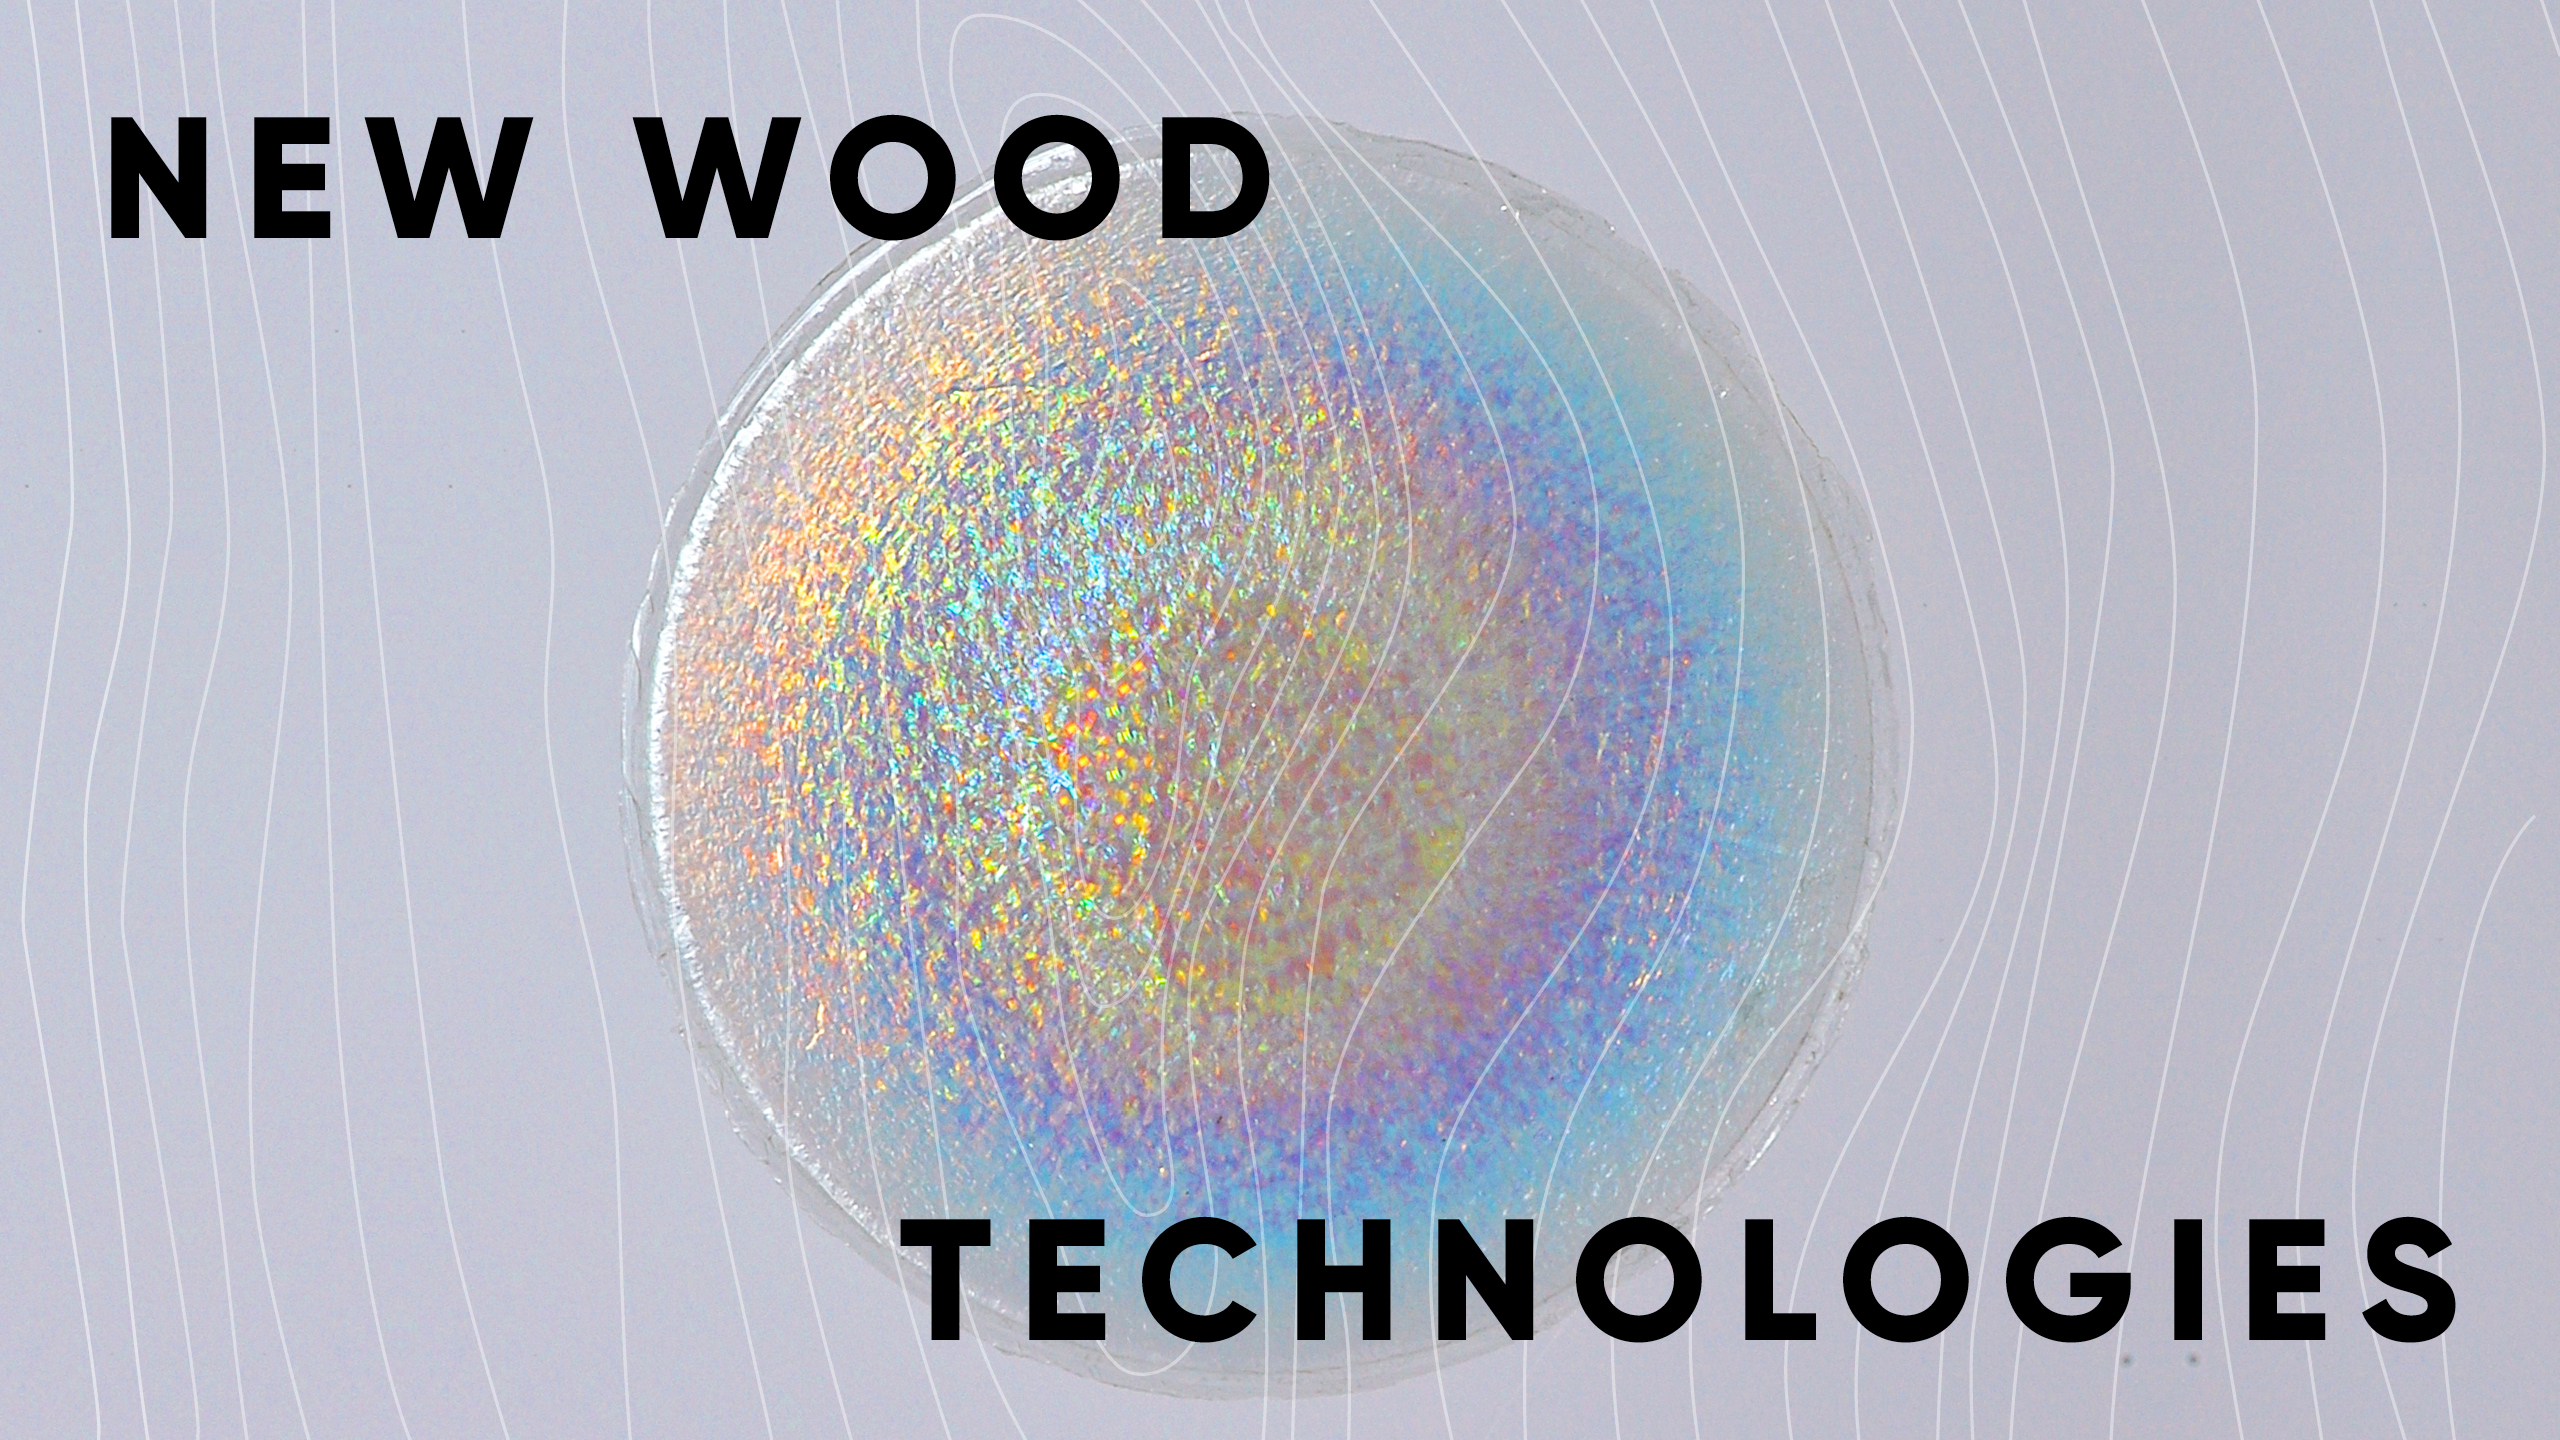 New wood technologies 